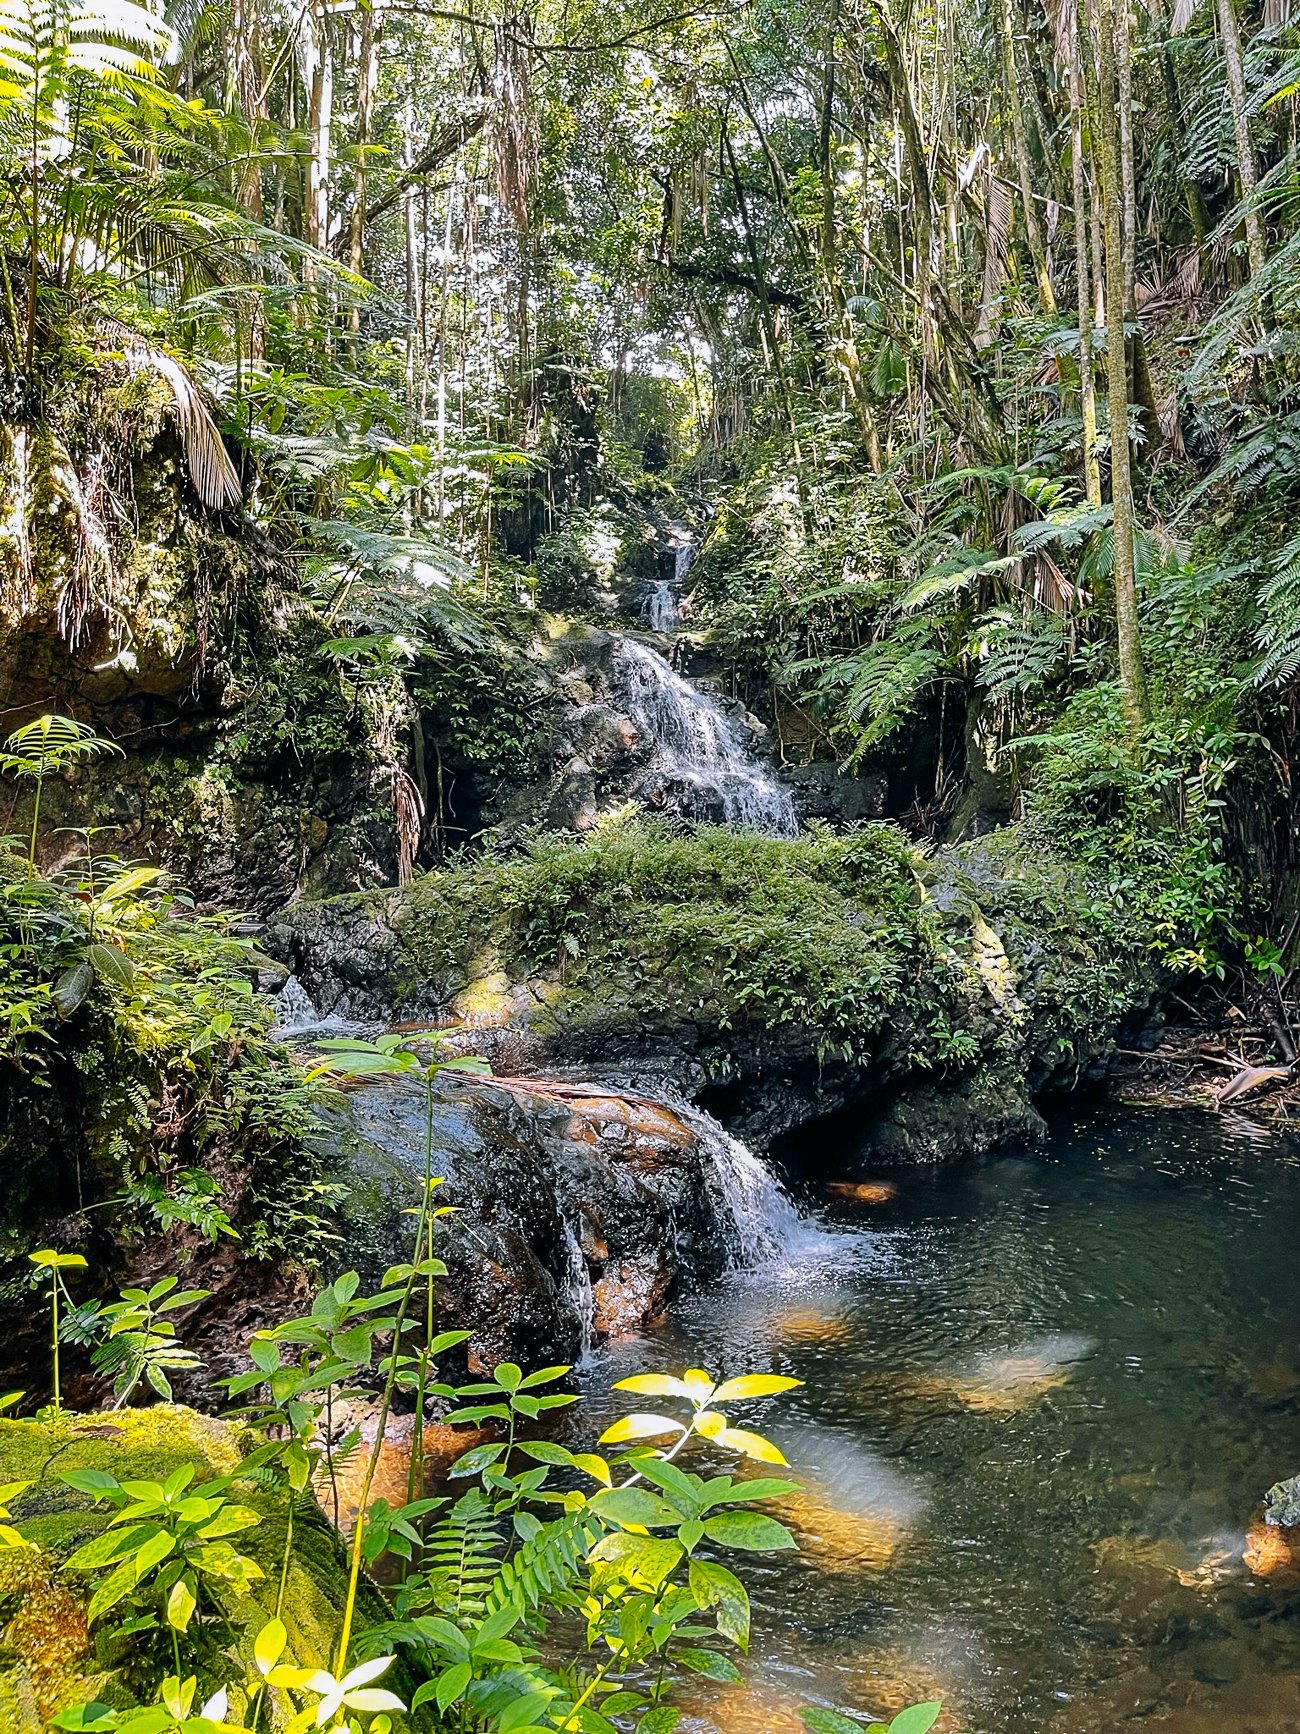 Flowing water in Hawaii Tropical Bioreserve